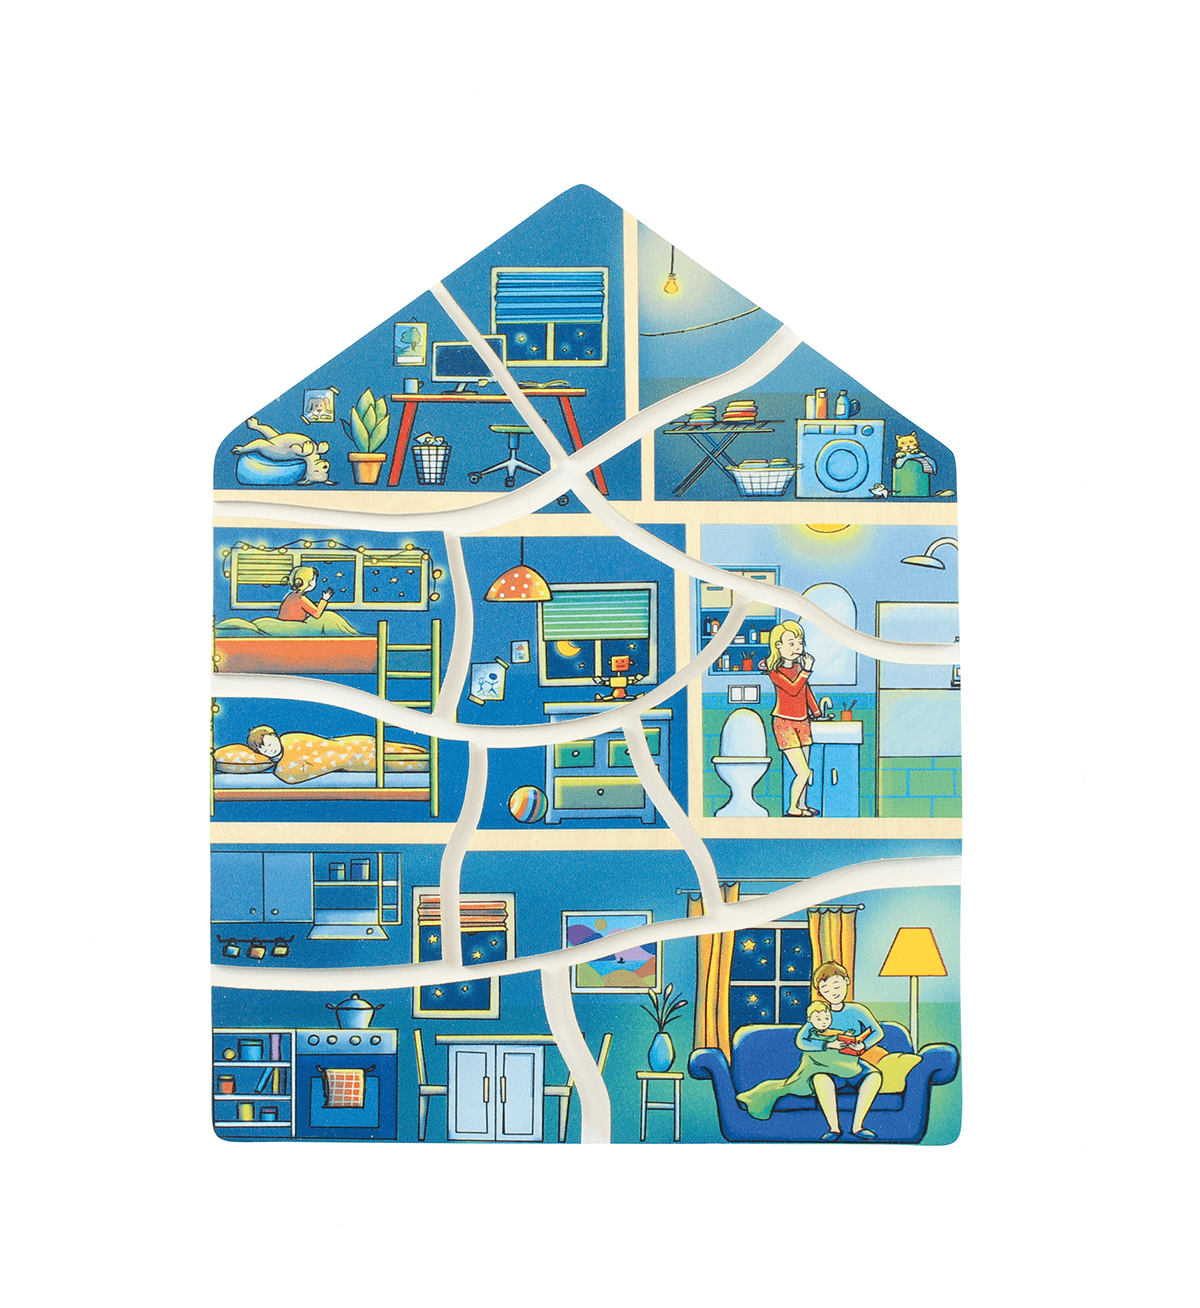 Beleduc Layer-Puzzle Home Look Inside 房屋裡多層情景找找看拼圖